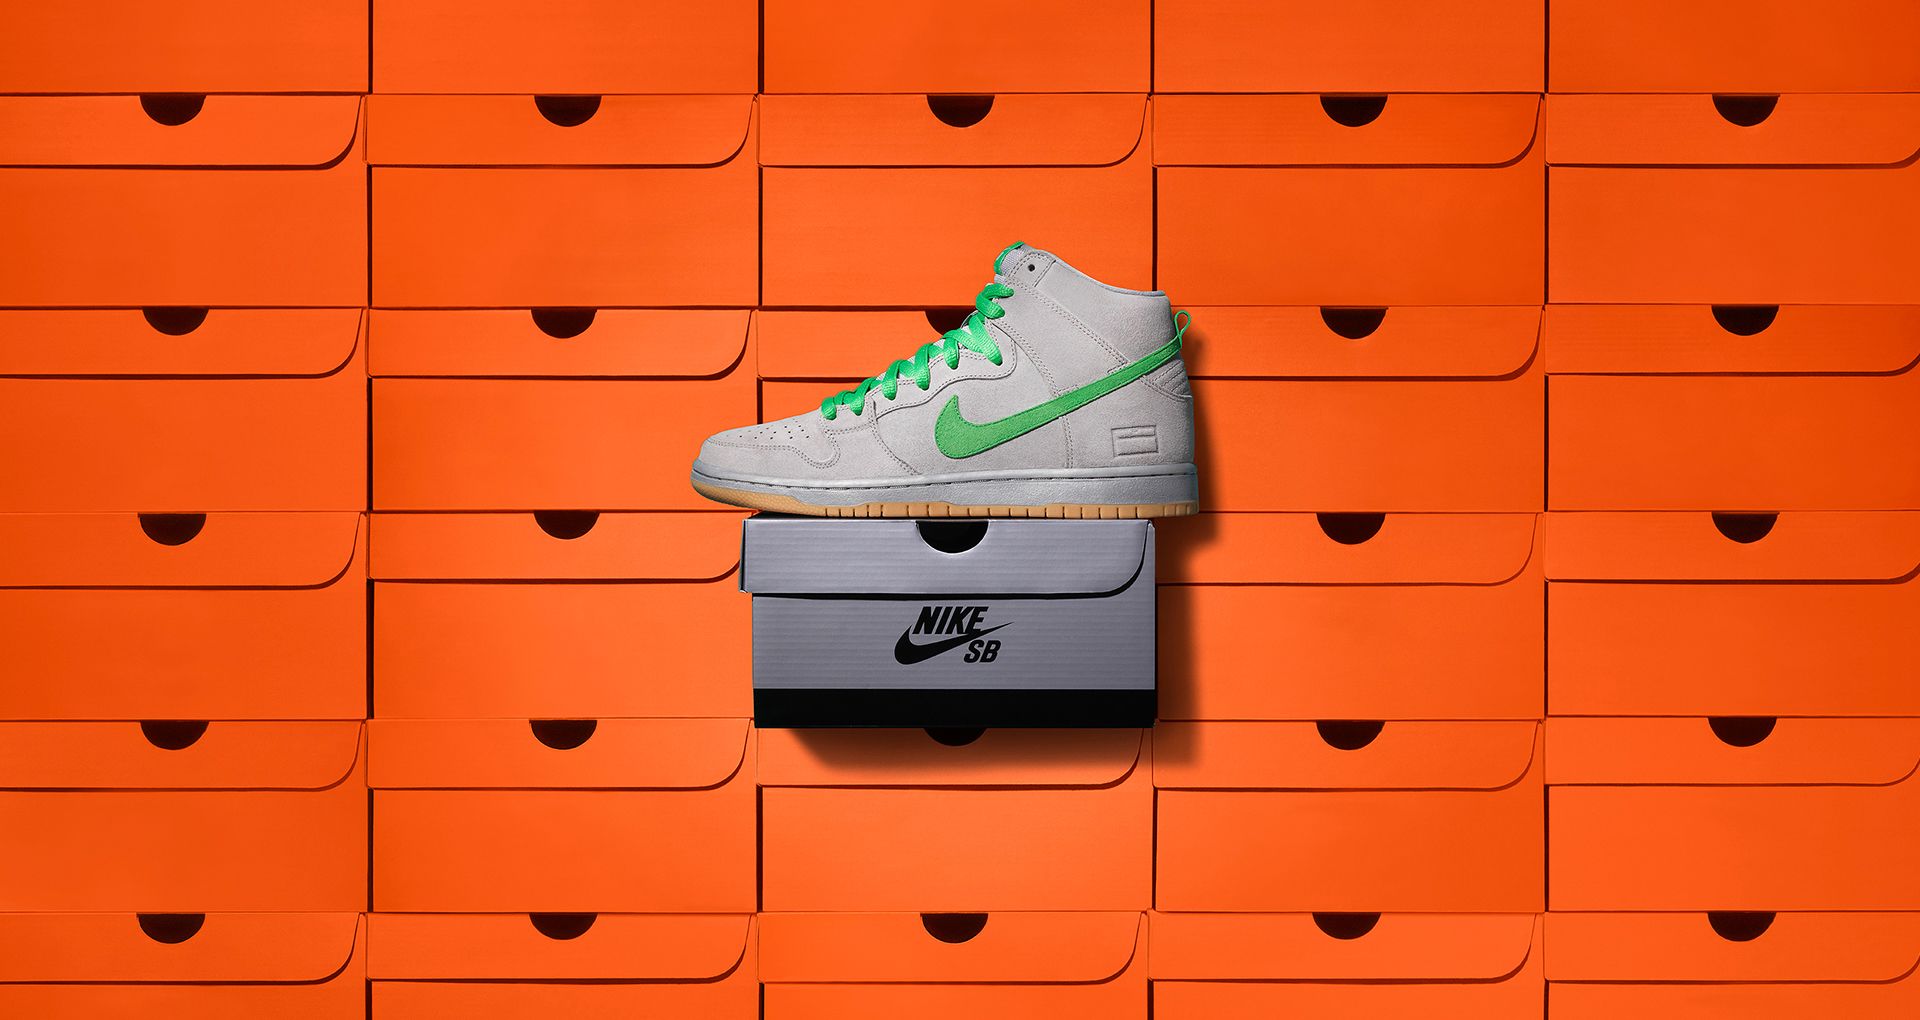 Найк доставка. Найк сб данк оранжевые. Nike Shoe Box 24 Orange/White. Nike Dunk Box. Nike Dunk коробки.